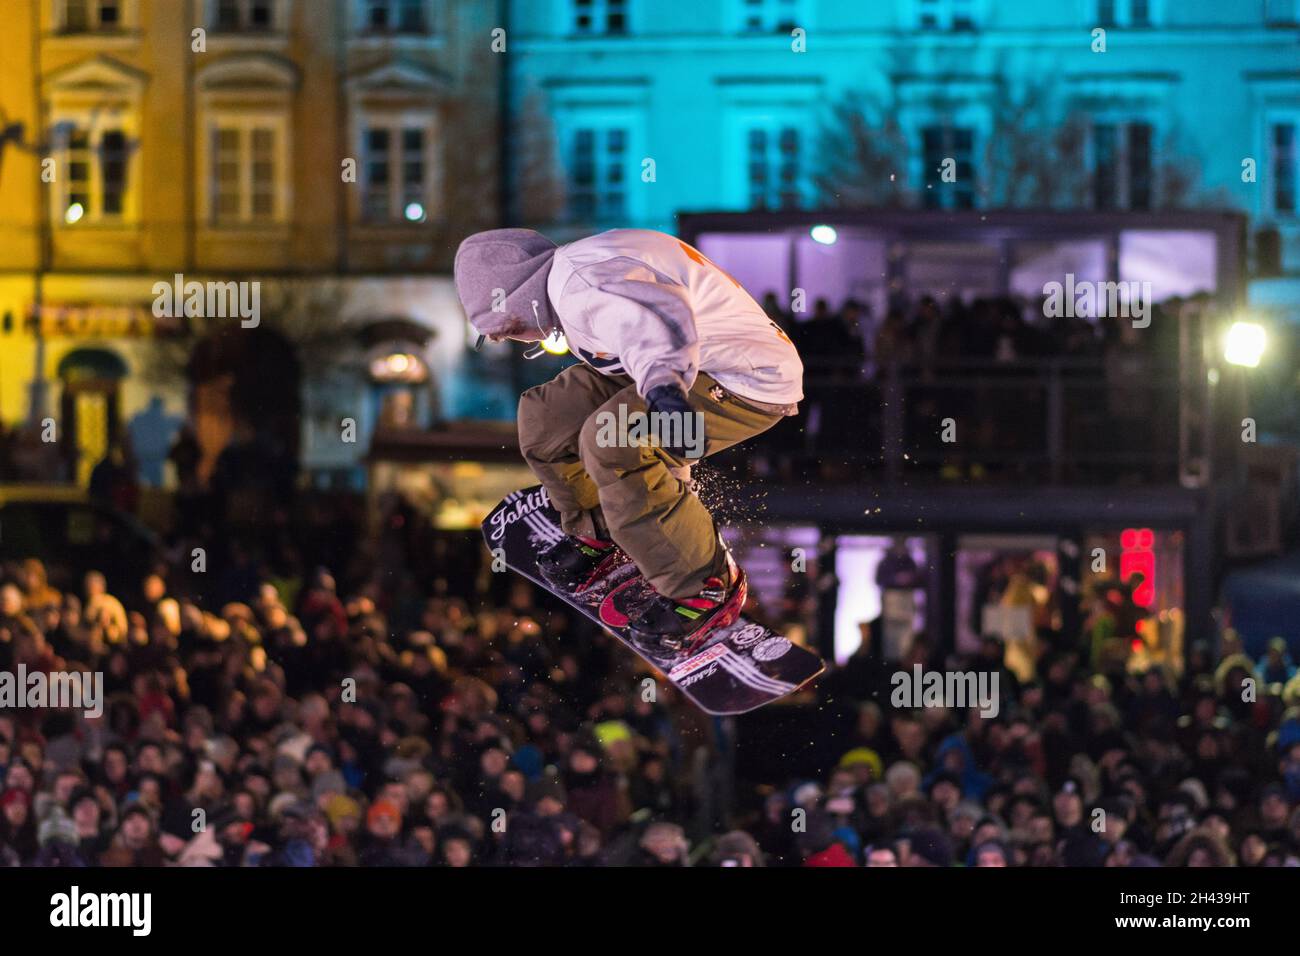 Lublin, Polonia - 3 de diciembre de 2016: Lublin Sportival - concurso de jibing (snowboard y freesking) en Castle Square (Plac Zamkowy) cerca del Castillo de Lublin Foto de stock